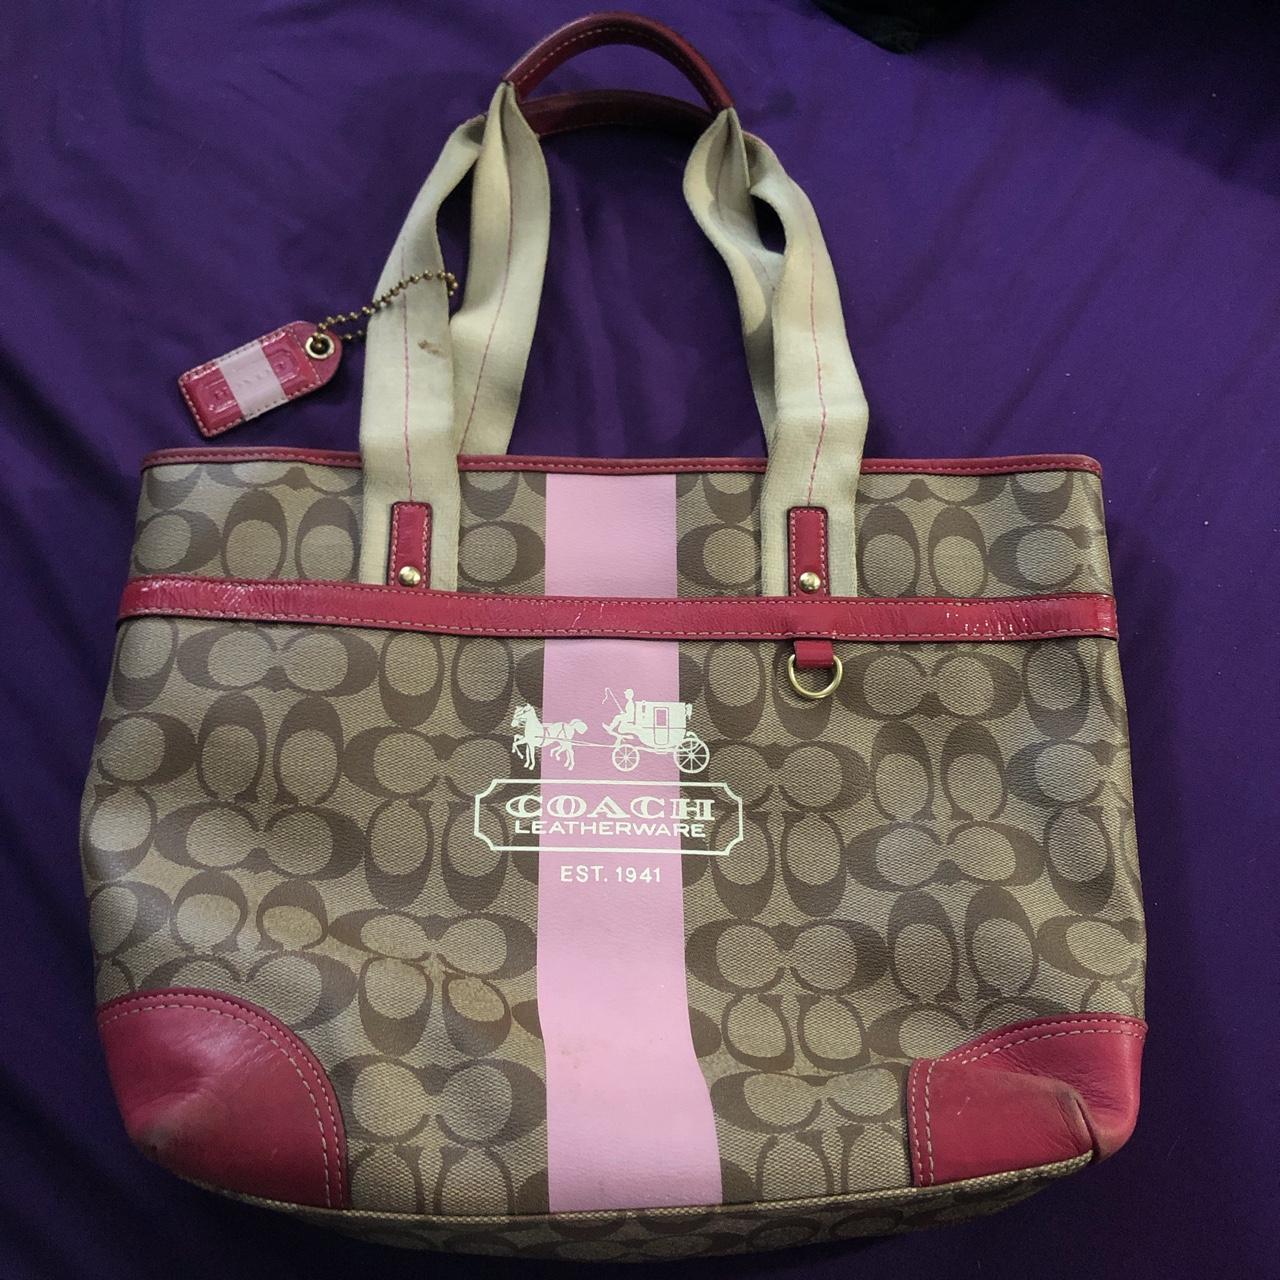 Coach Est 1941 Handbag Tote Gal Color Sv / Bordeaux New $348 | eBay